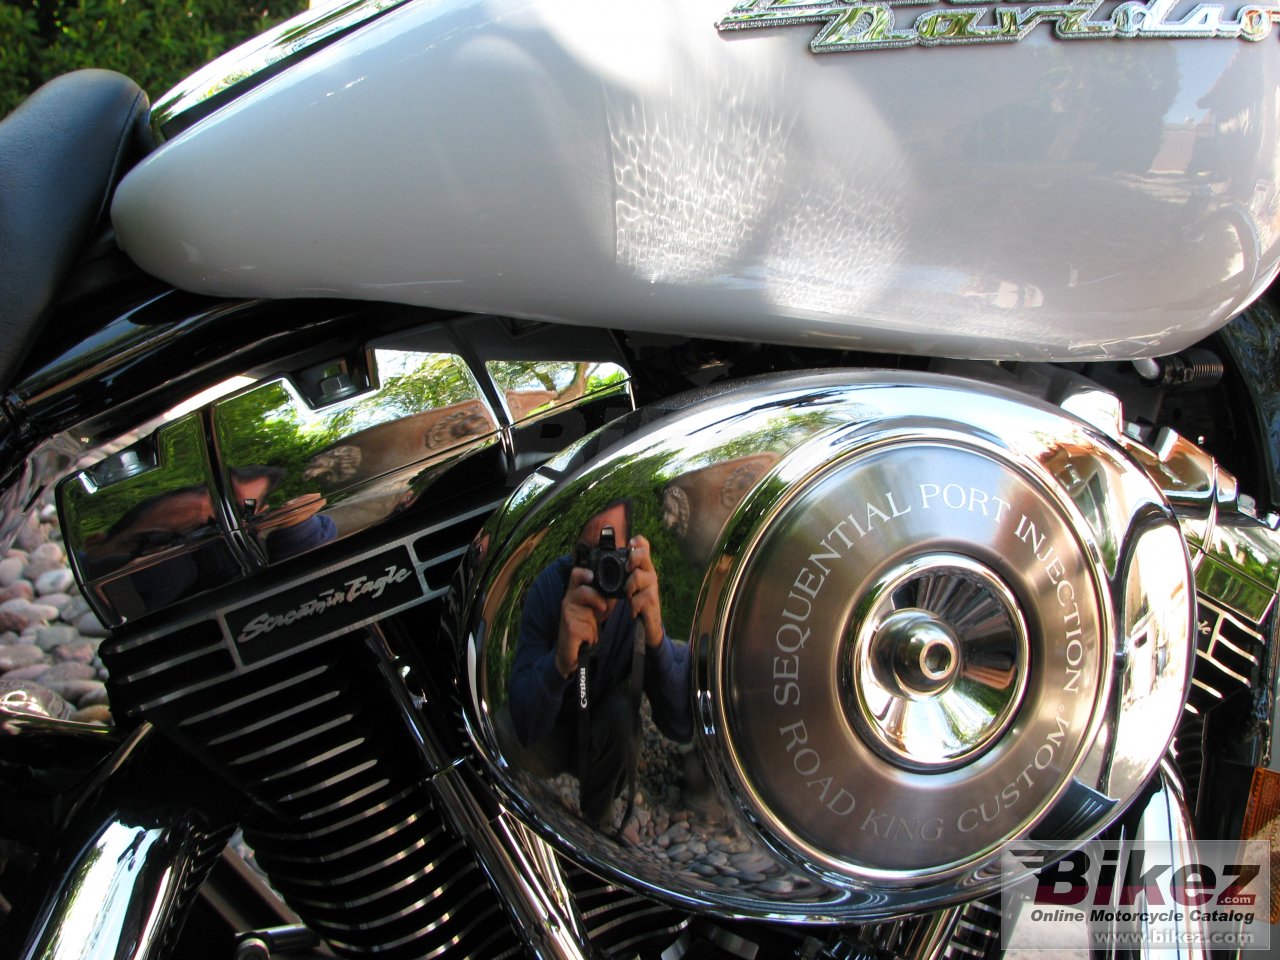 Harley-Davidson FLHRSI Road King Custom